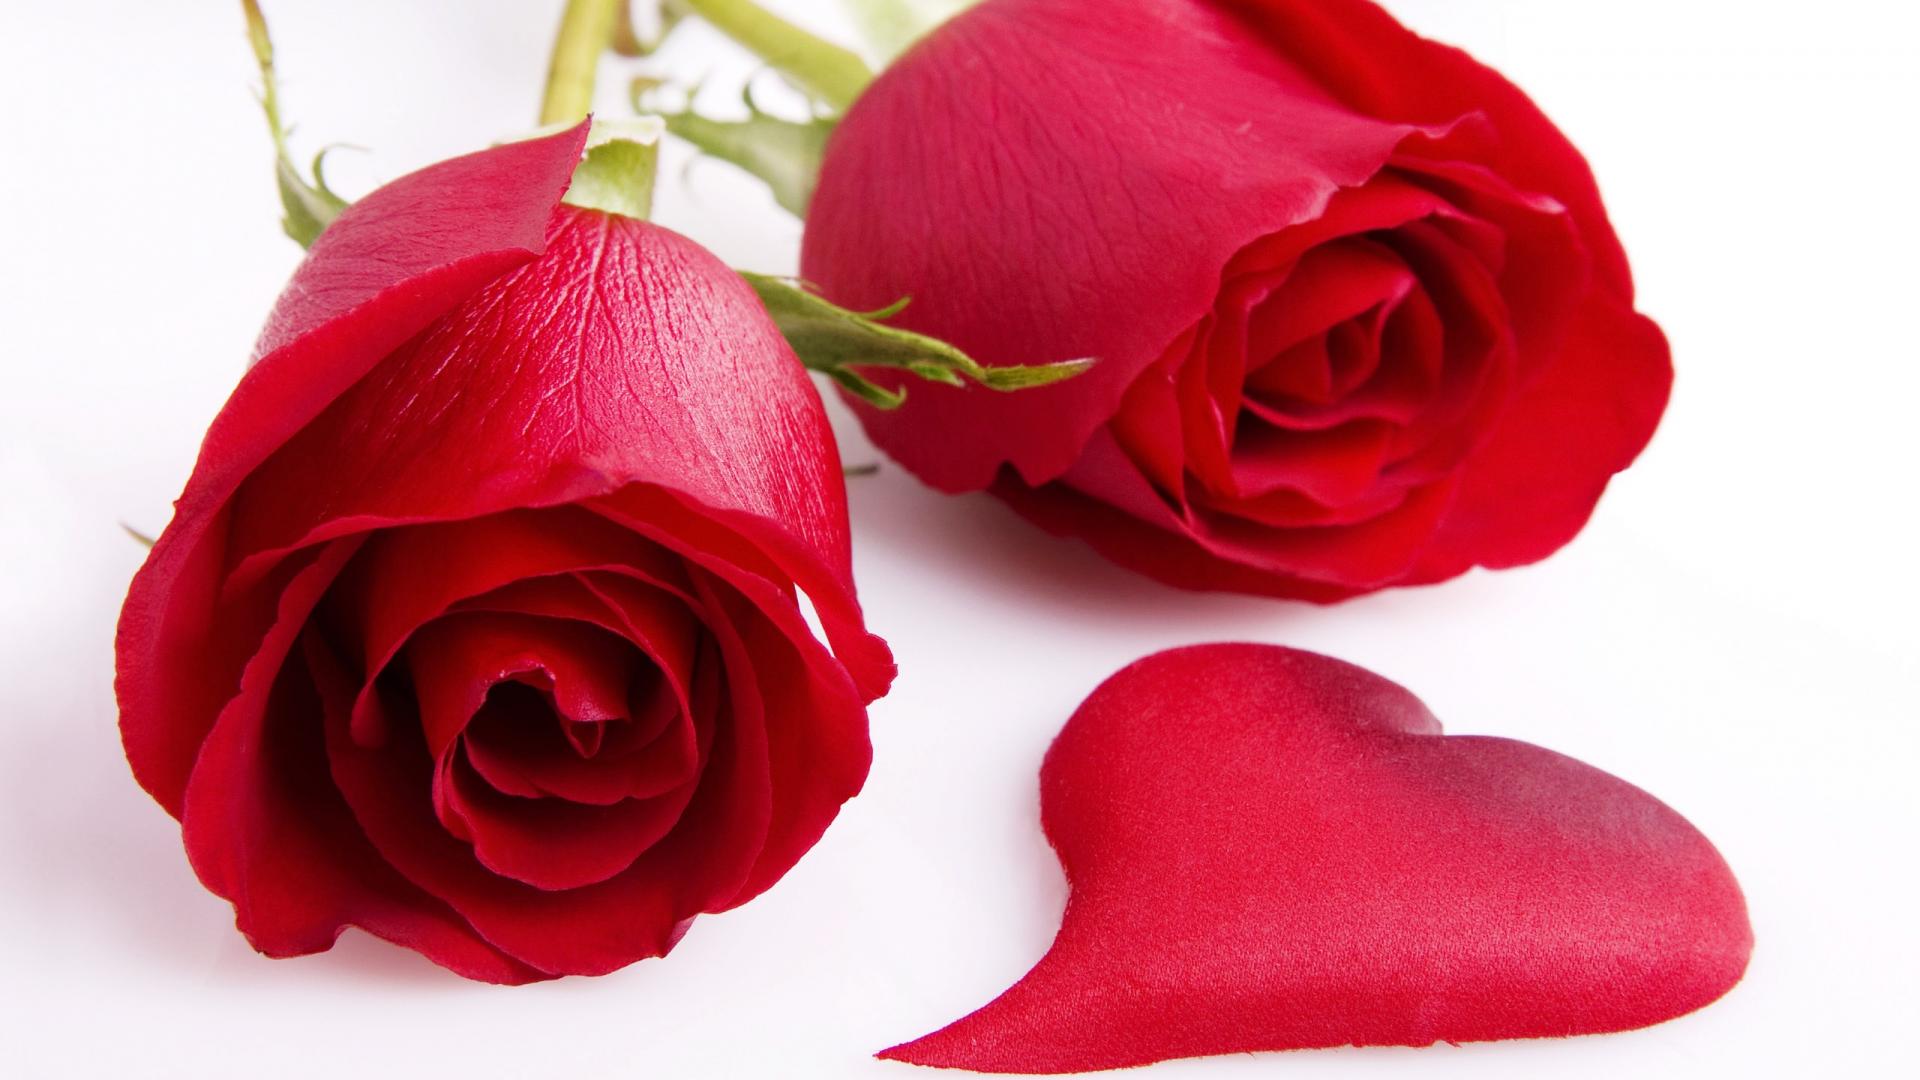 Red Rose And Heart Valentine Free Background Desktop Images ...